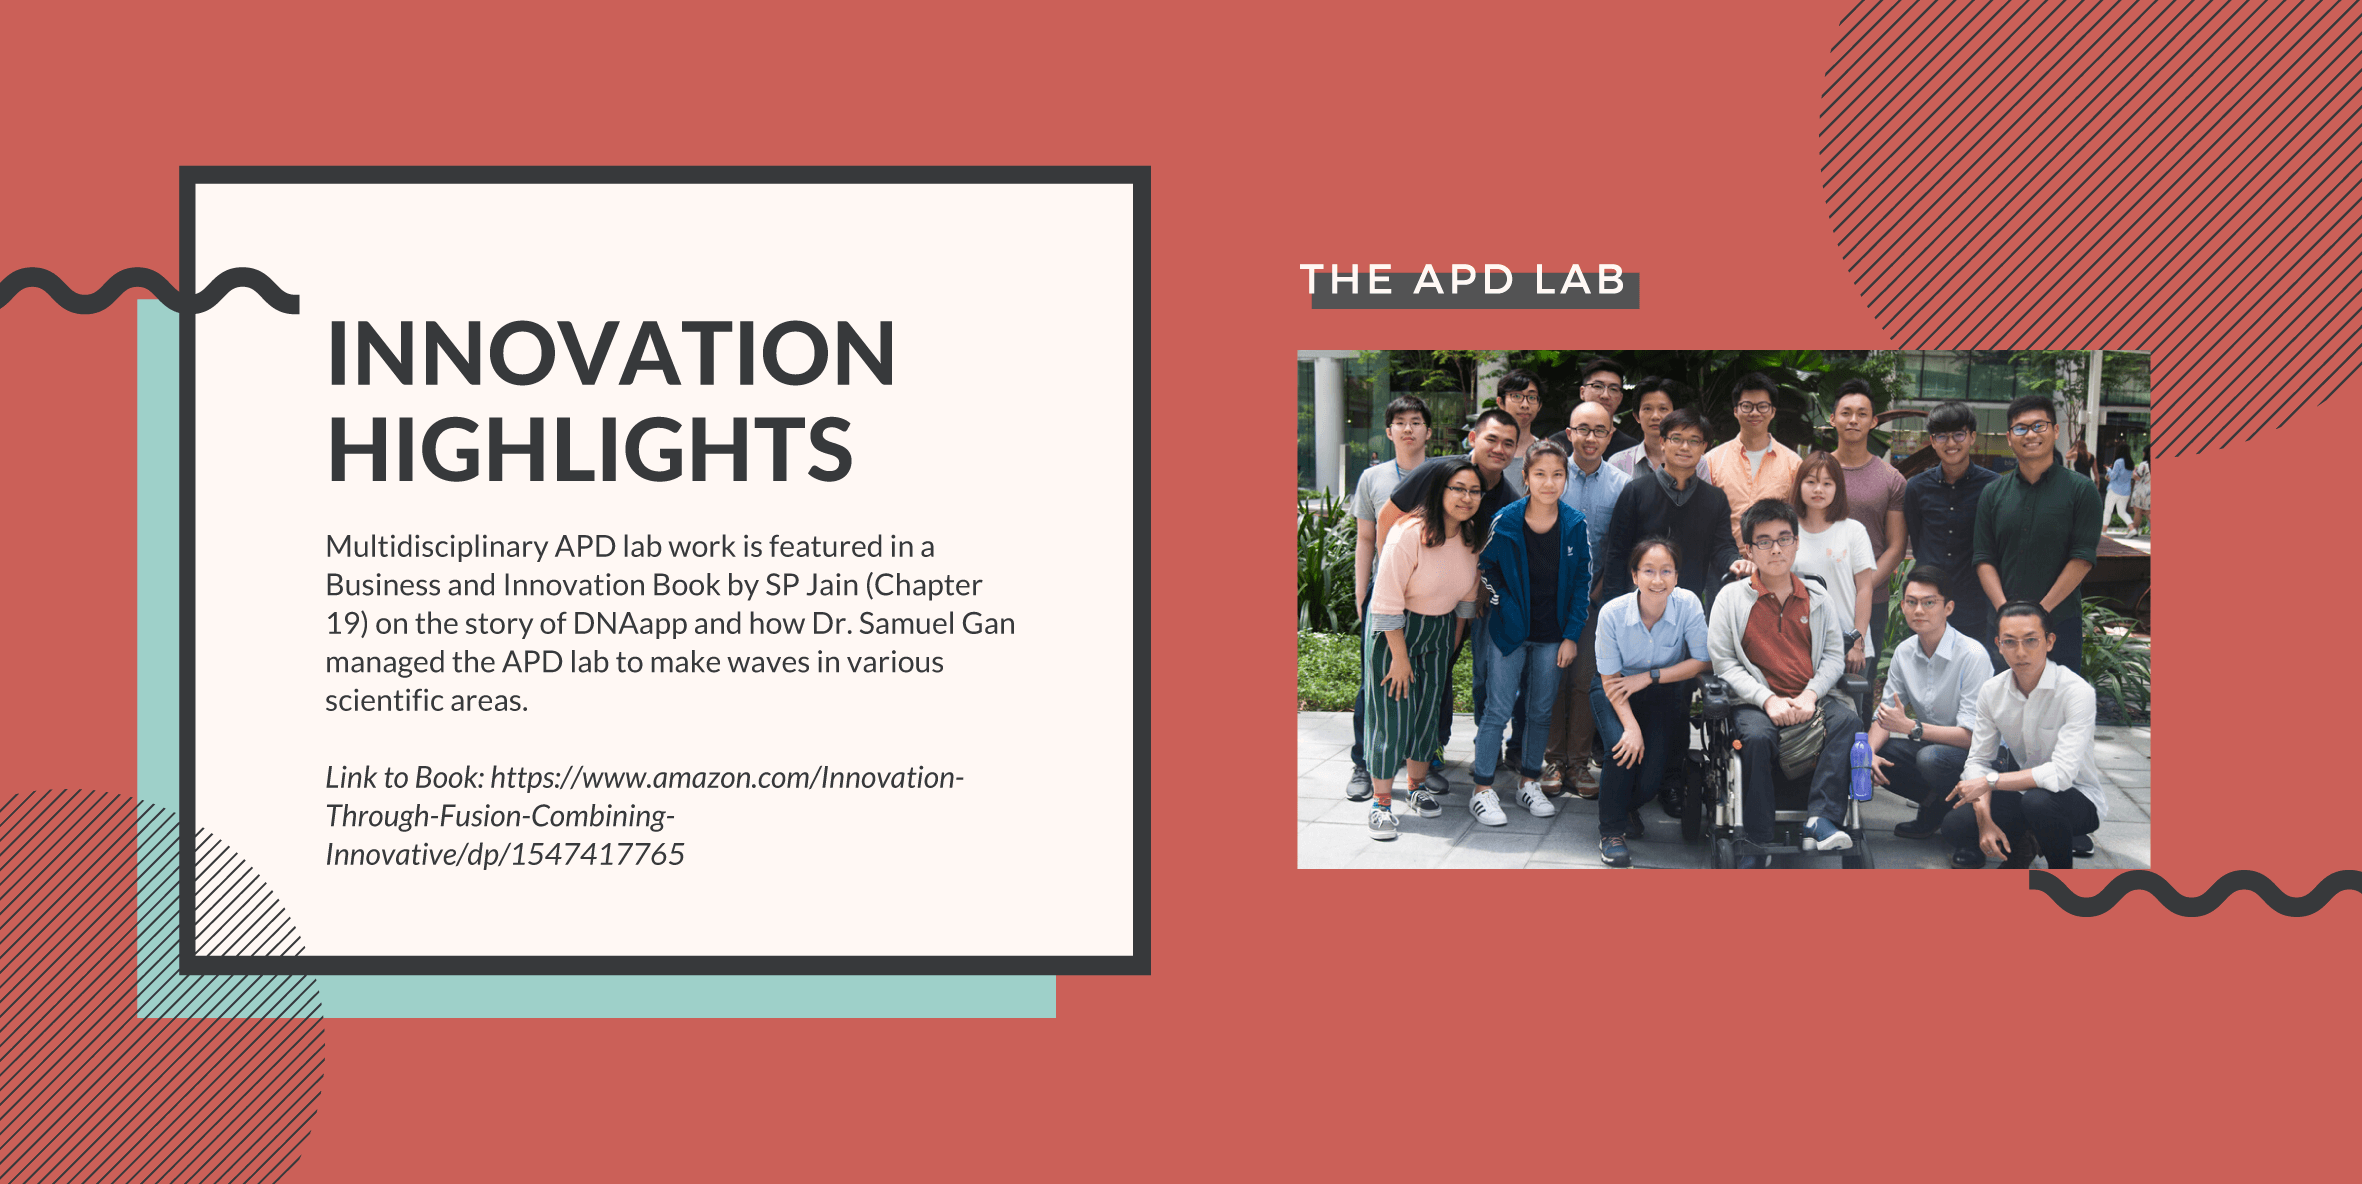 BII - APD Lab Innovation highlights